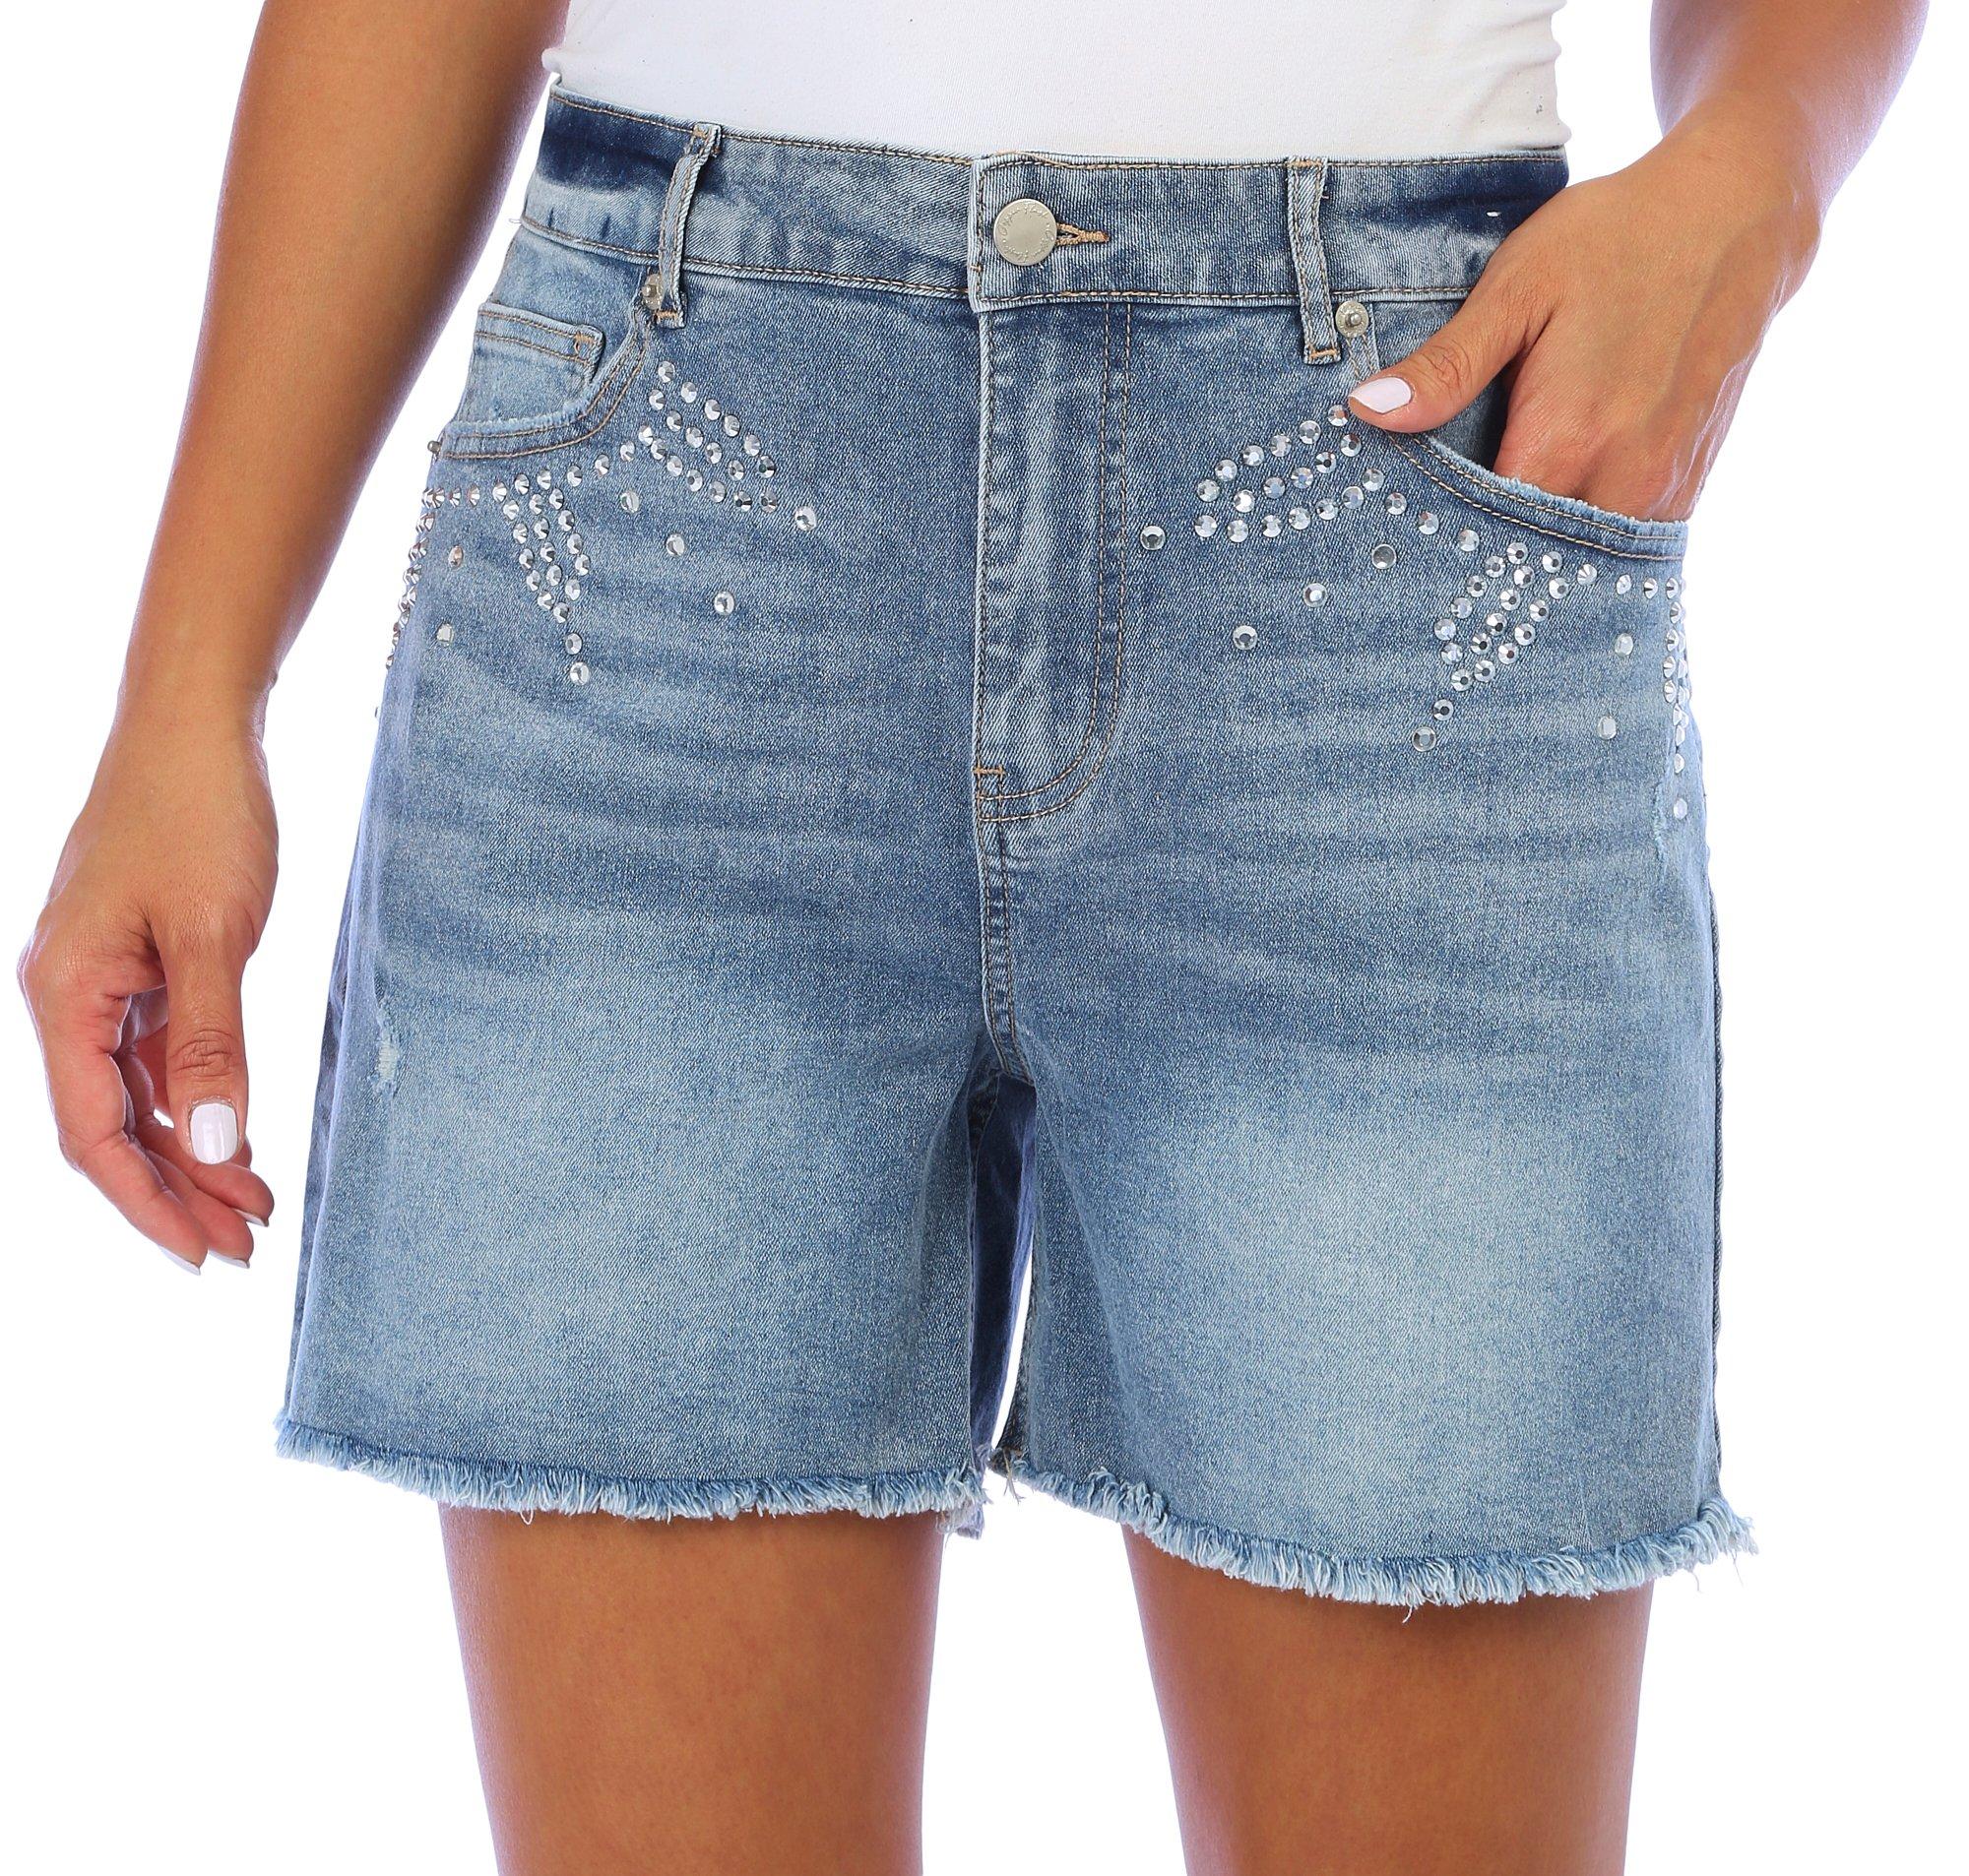 COPPERFLASH Womens Embellished Pocket Denim Shorts